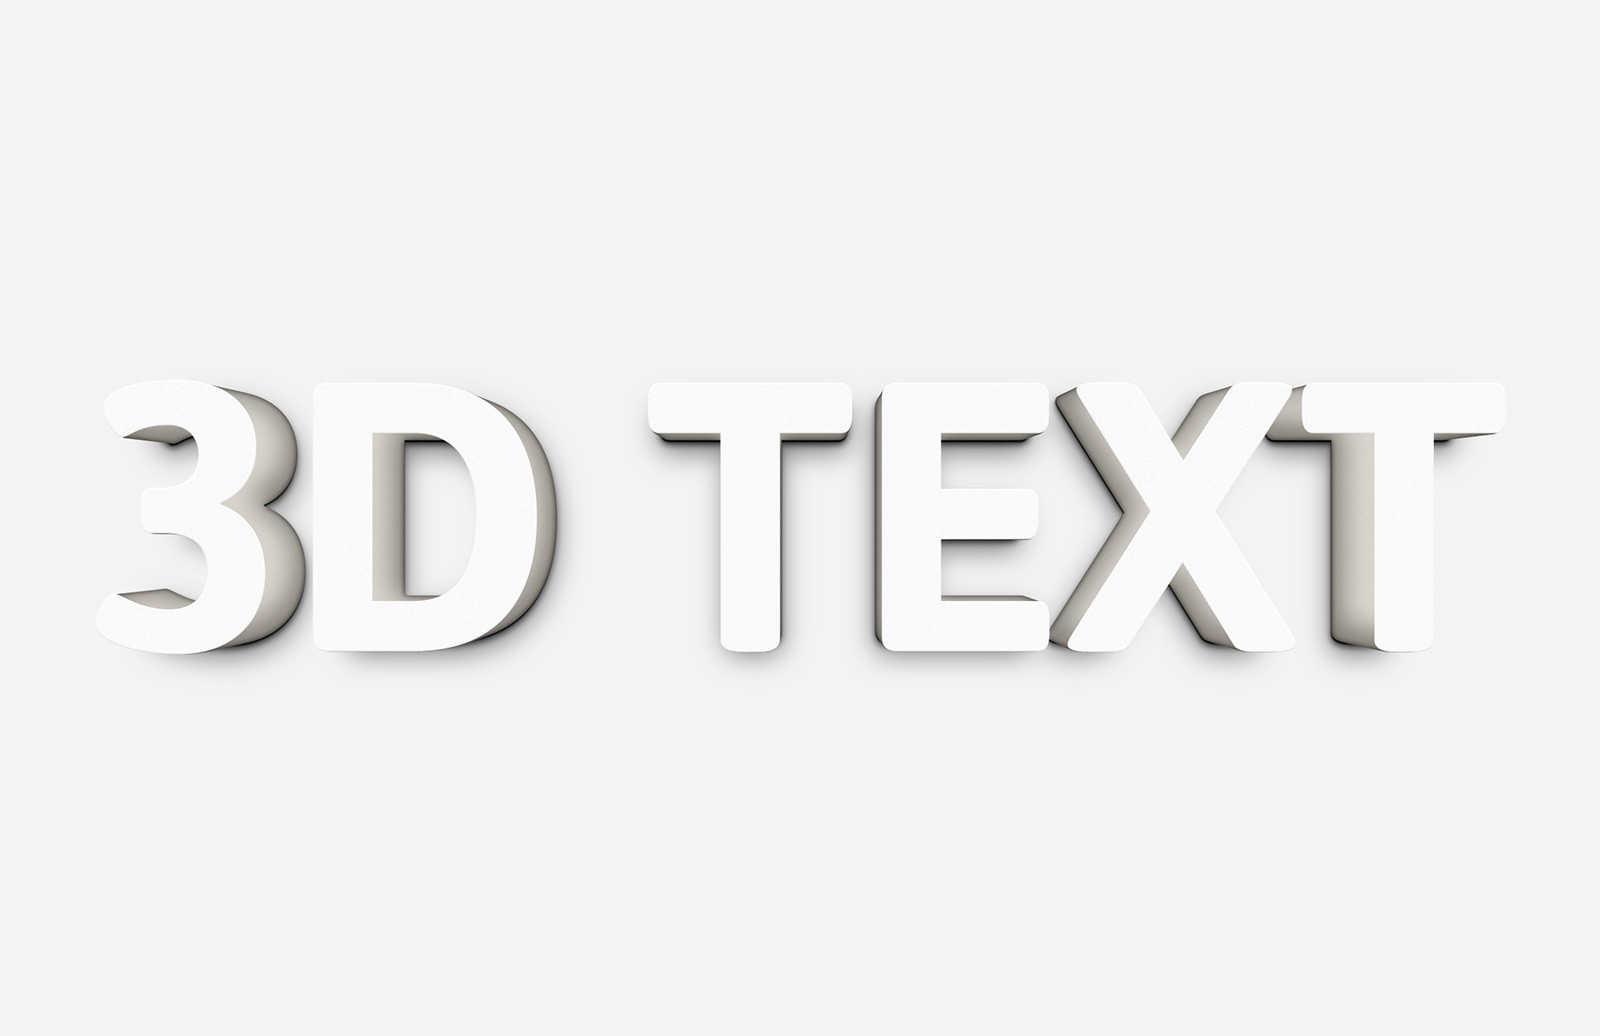 PS 超逼真立体 3D 文字样式 3D Text Effect for Photoshop插图